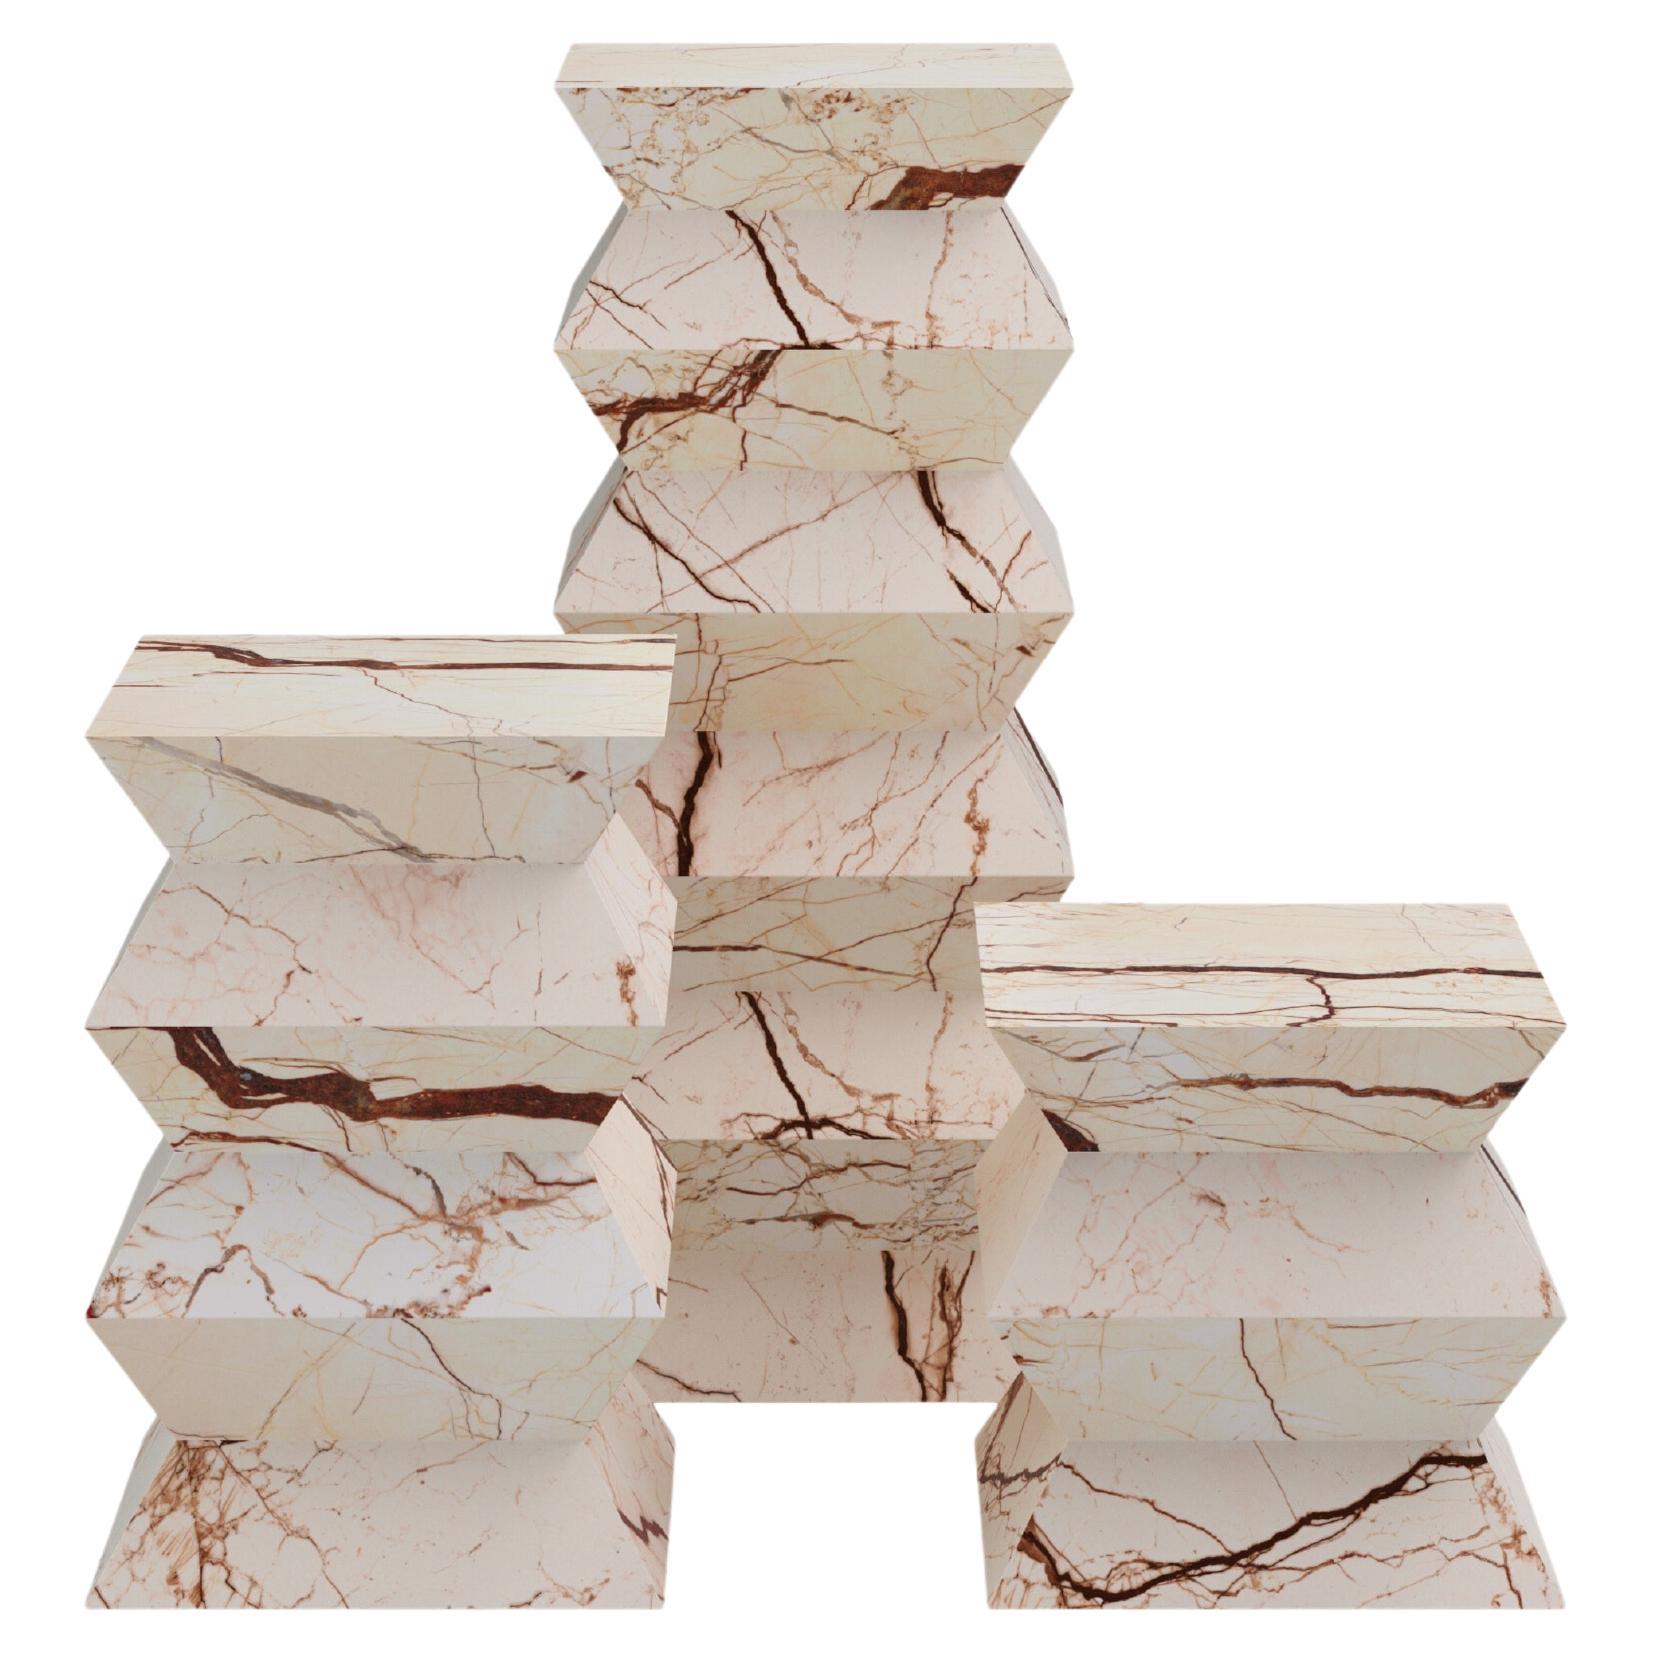 FORM(LA) Grinza Pedestal 16"L x 16"W x 24"H Sofita Beige Marble For Sale